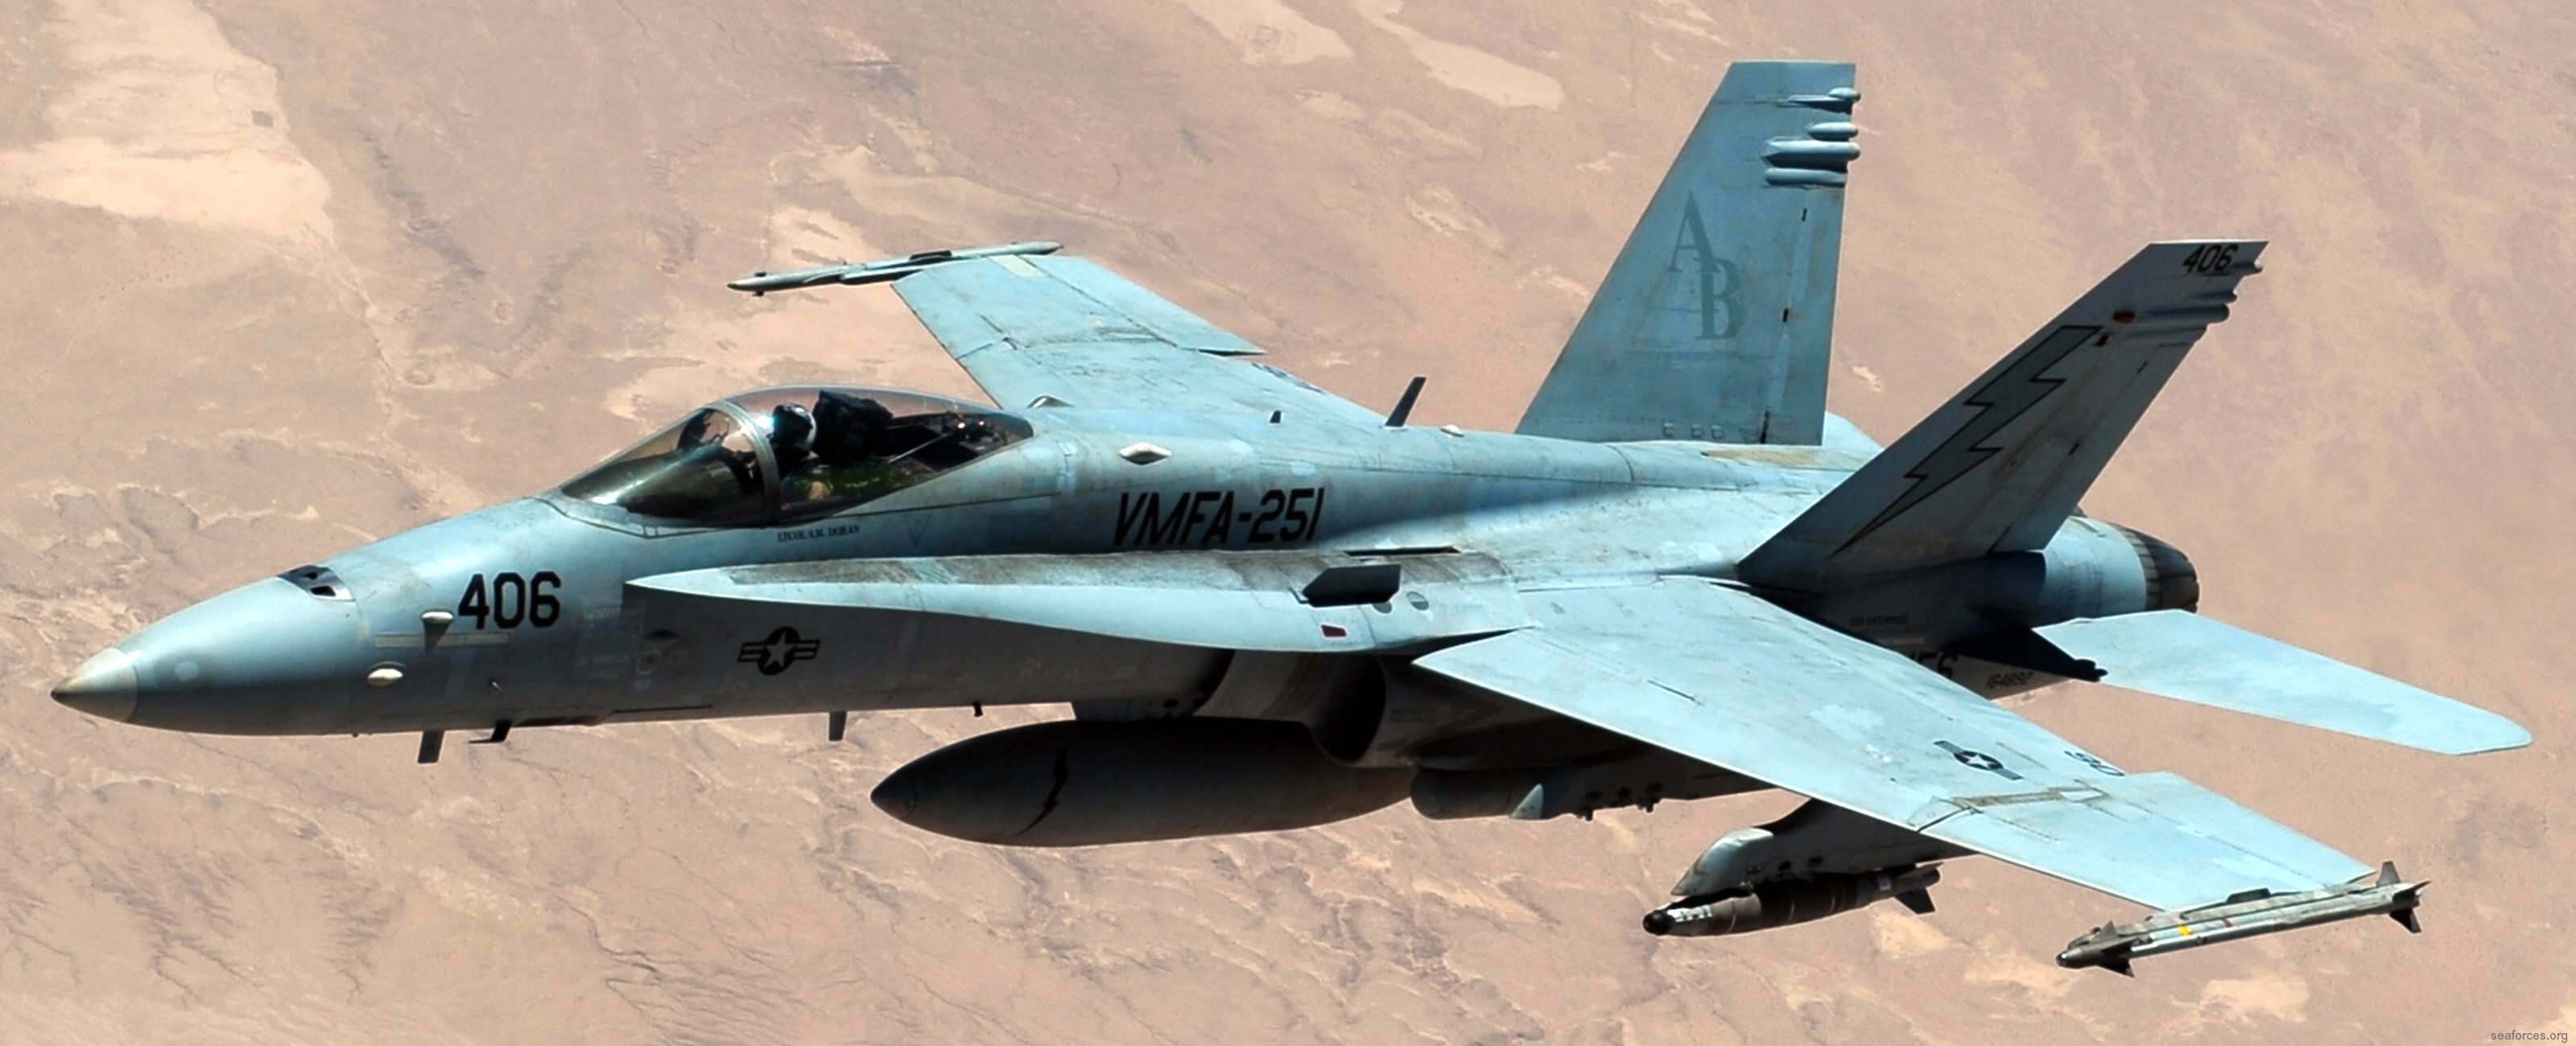 vmfa-251 thunderbolts marine fighter attack squadron f/a-18c hornet cvw-1 uss enterprise cvn-65 afghanistan 144